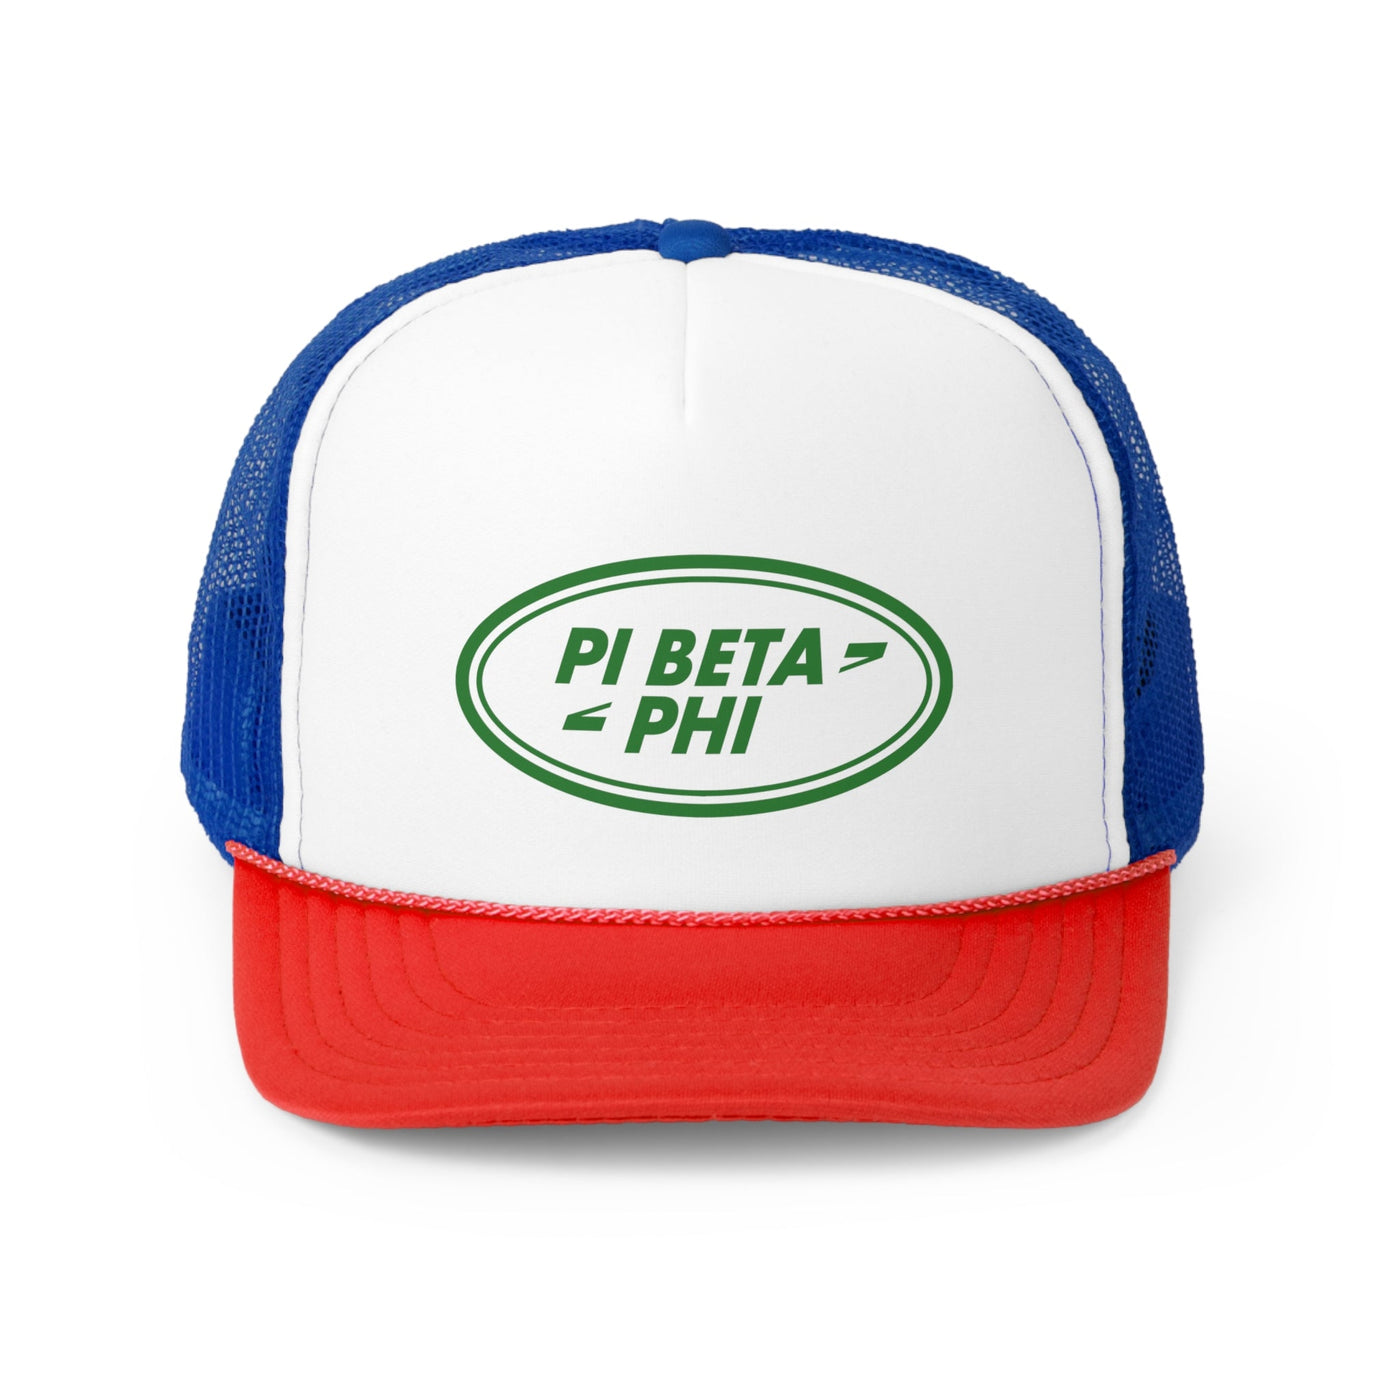 Pi Beta Phi Trendy Rover Trucker Hat